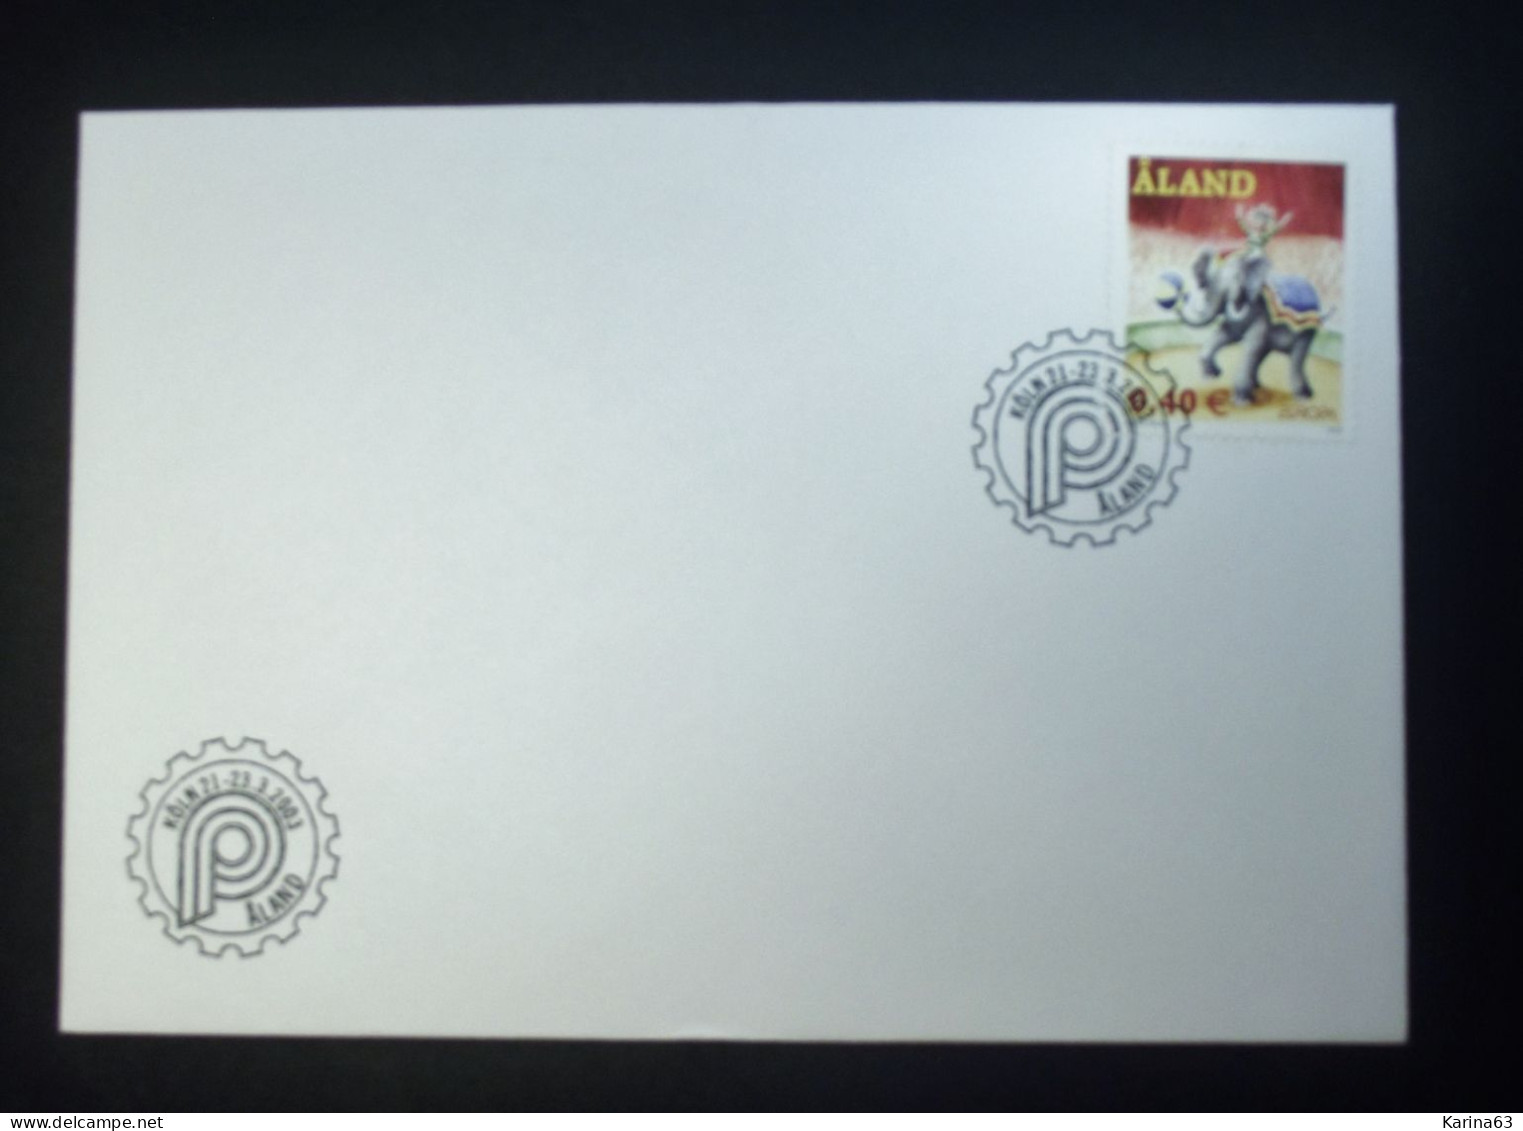 Aland - 2002 - Envelope - Stamp N° 207  - Europa - Circus - Elephant - Koln - Aland 2002 - Aland